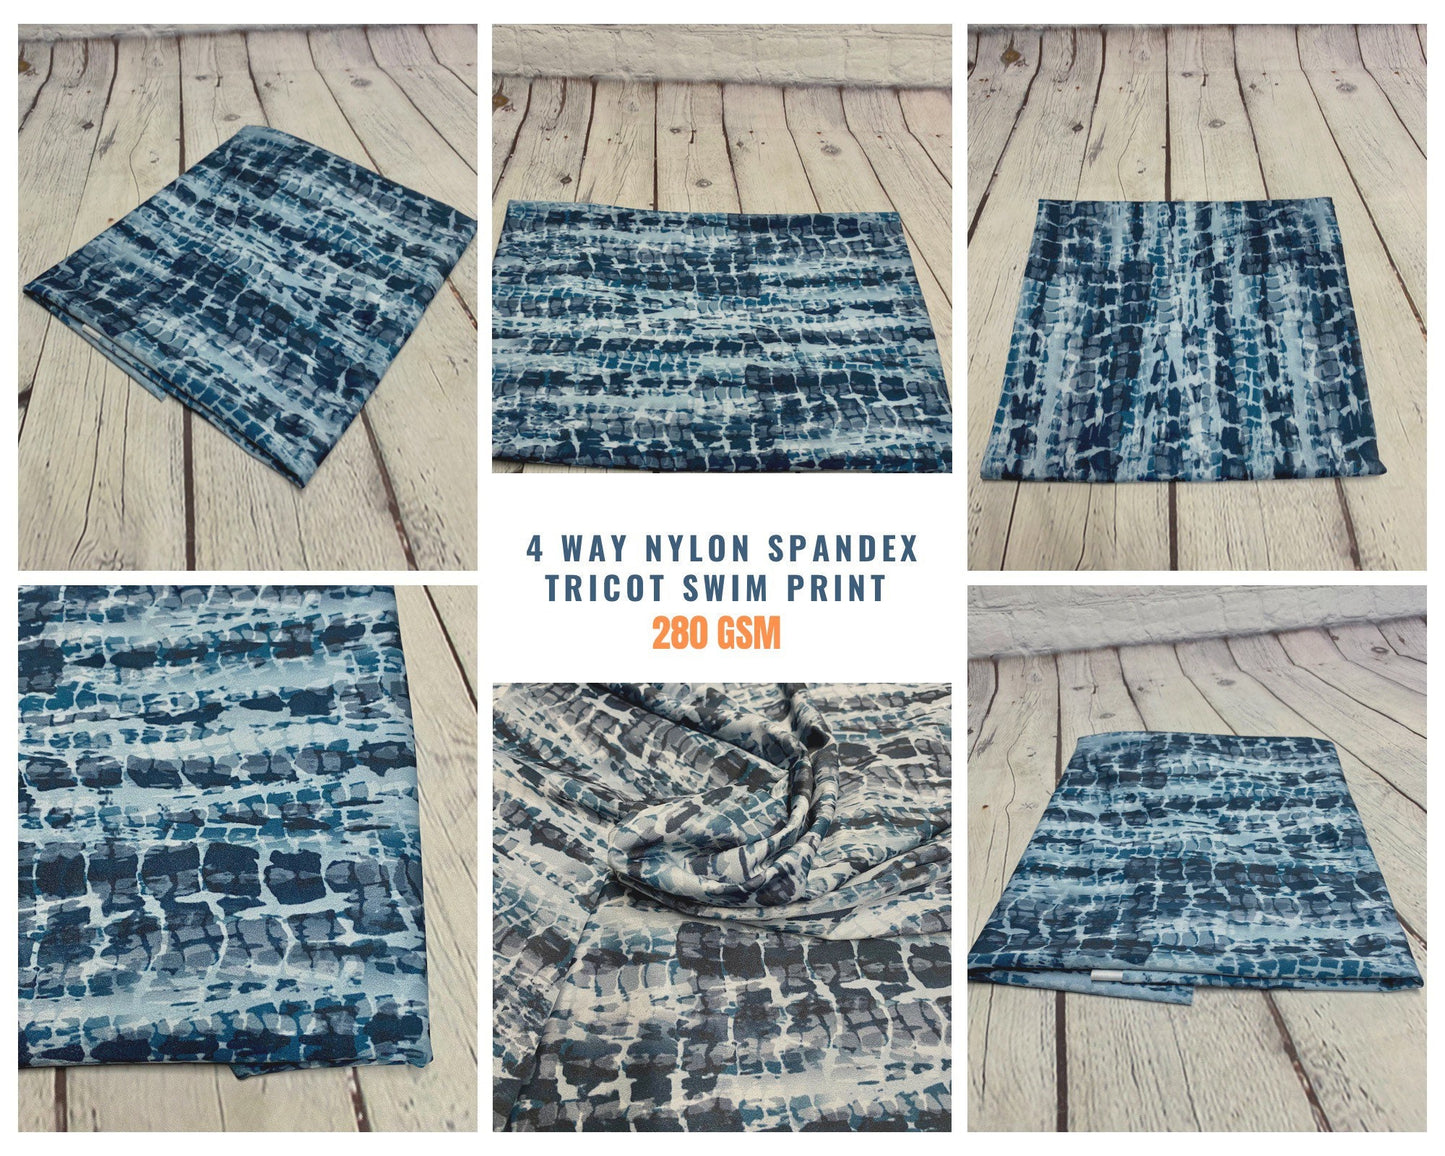 4 Way Stretch Print Nylon Spandex Fabric By The Yard Tricot Swim Wear Bikini Active Wear Acid Wave Tie Dye Green Blue Black 280 GSM